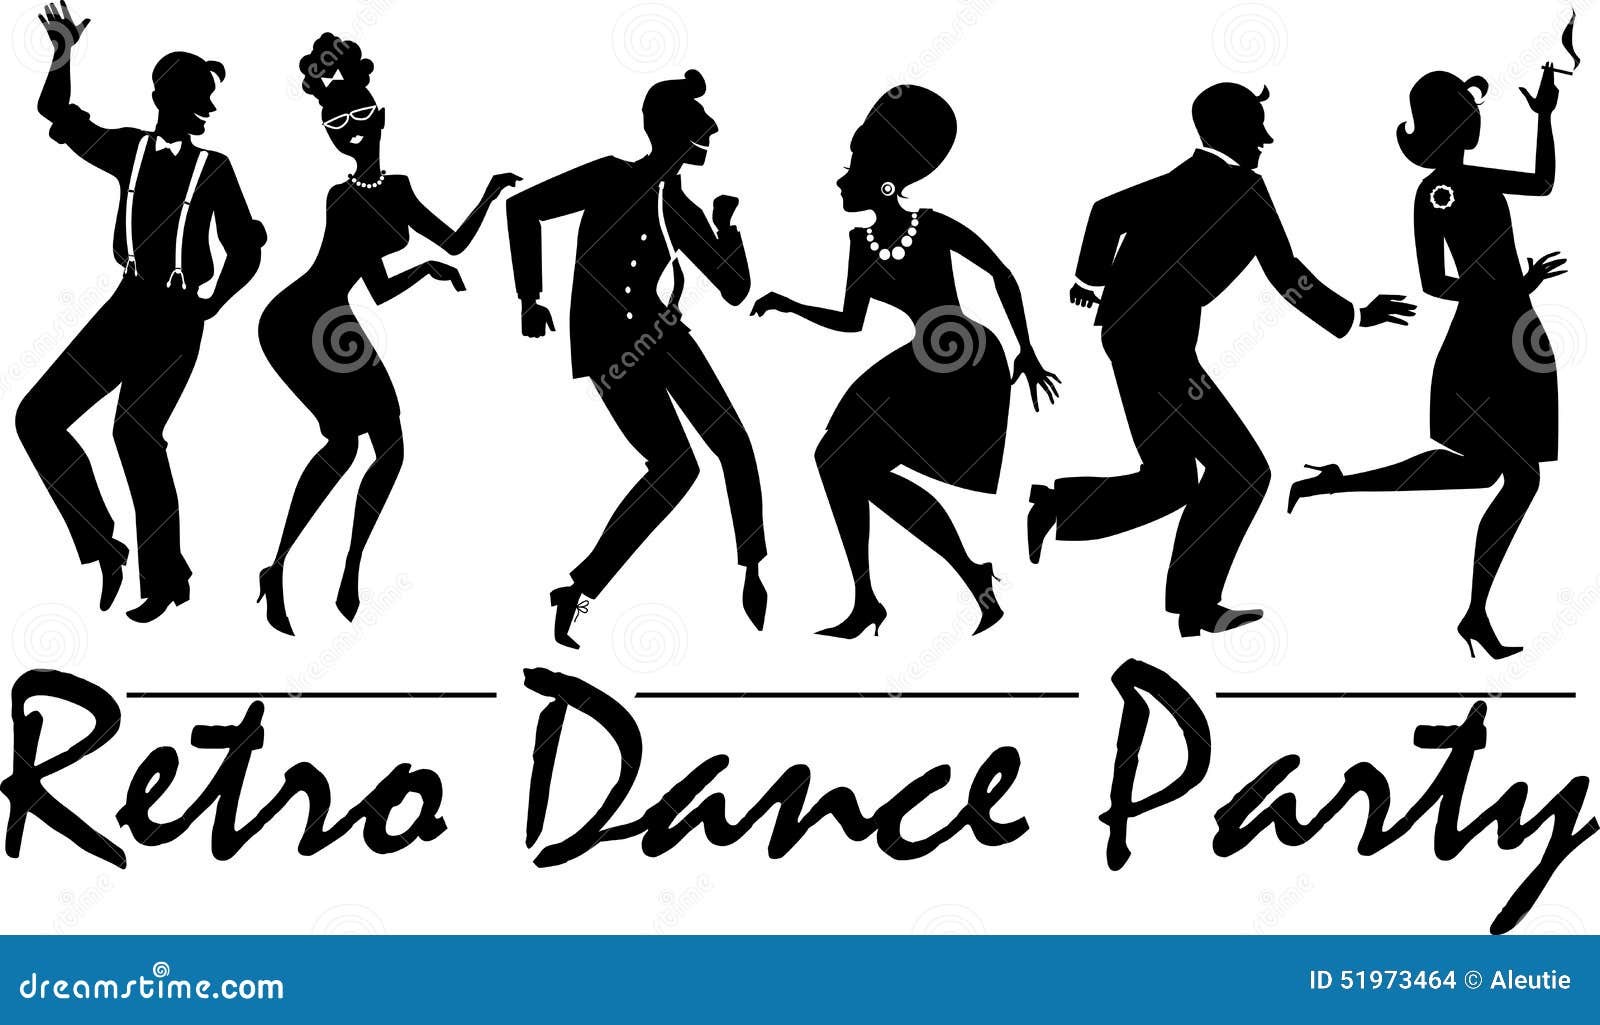 Retro dance party stock vector. Illustration of twist ...